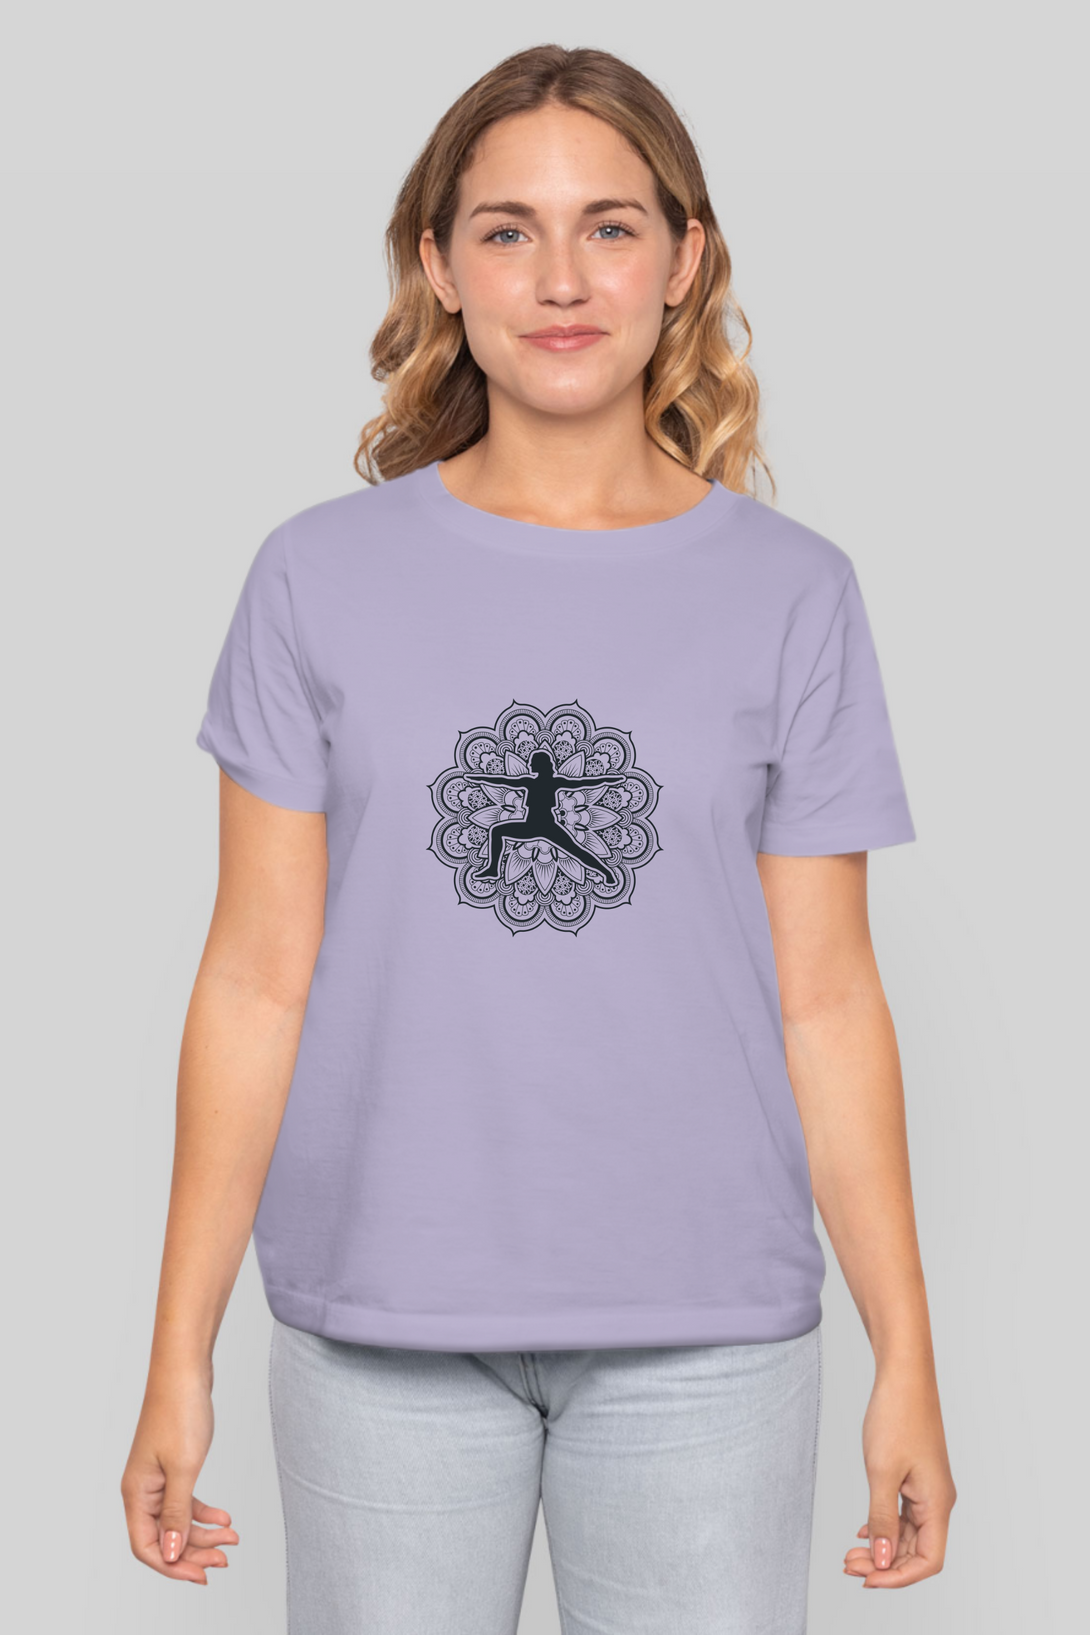 Yoga Pose Mandala Printed T-Shirt For Women - WowWaves - 11